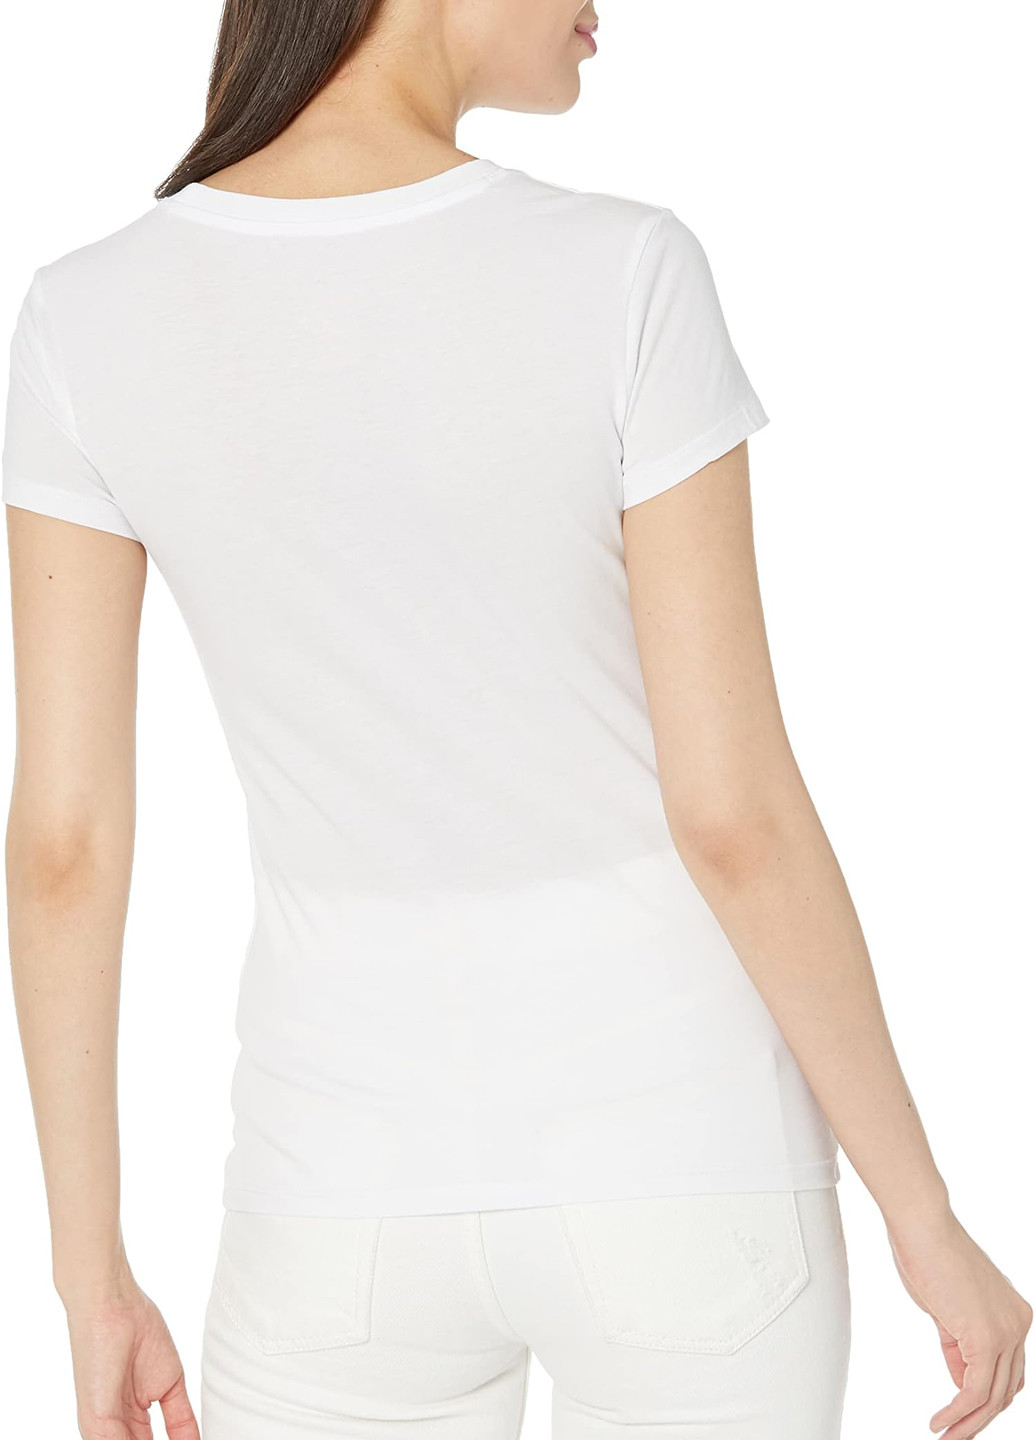 Белая летняя футболка Armani Exchange